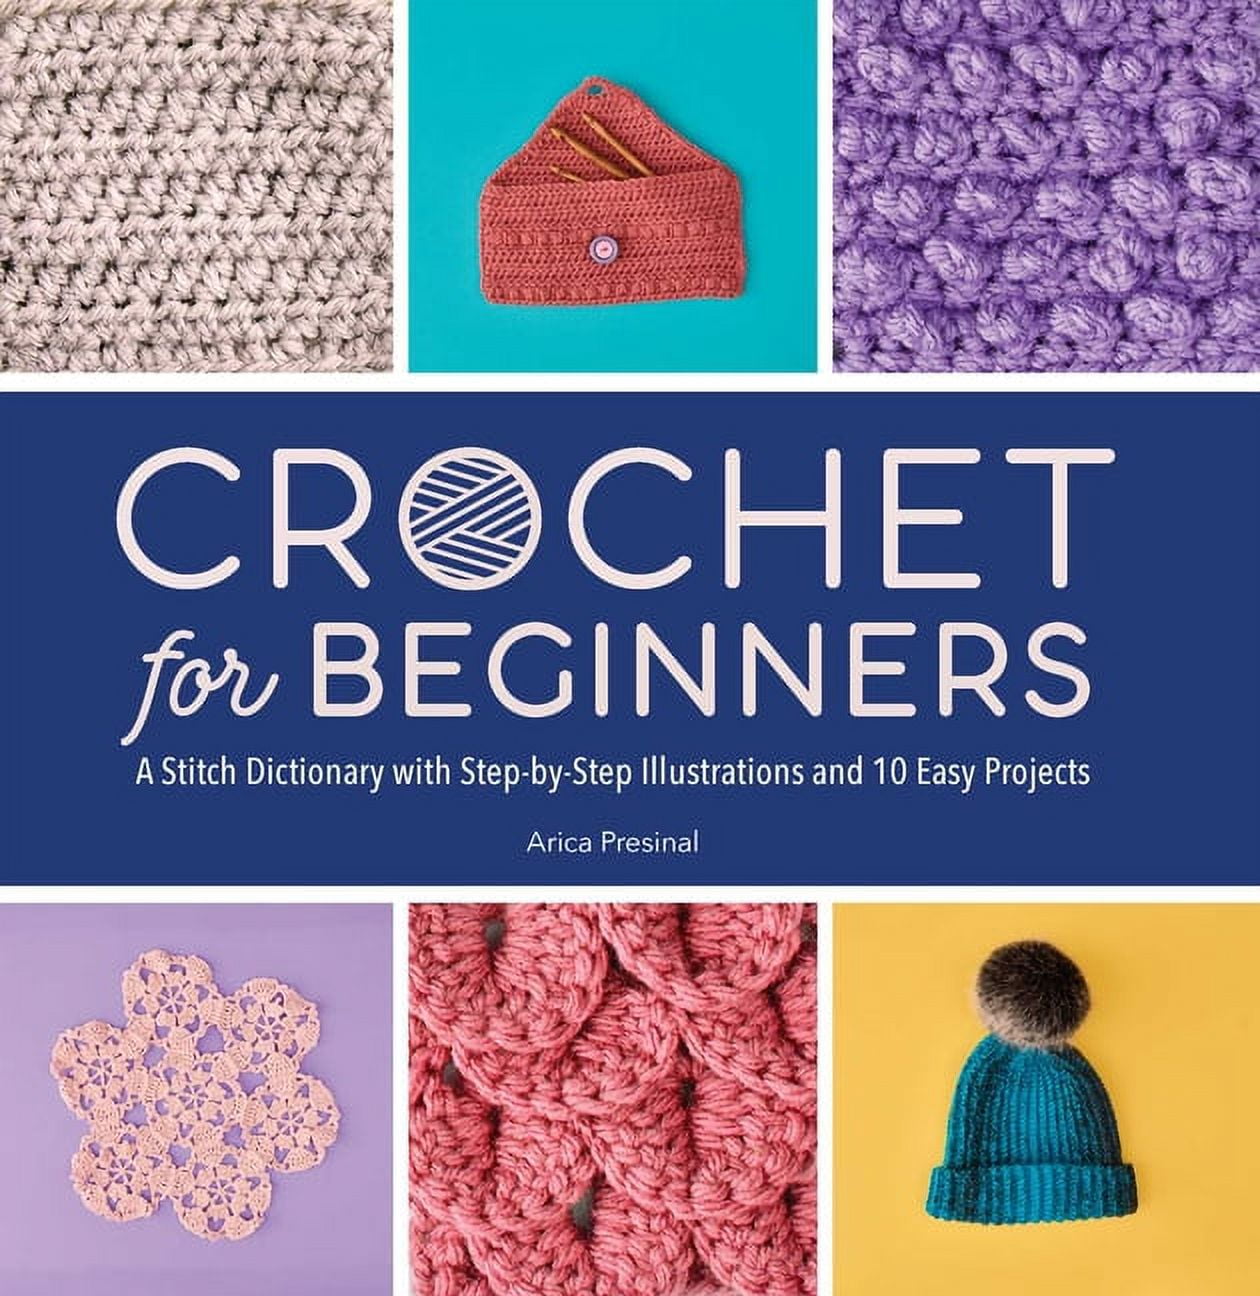 10 Best Crochet Books Every Crocheter Needs - Nicki's Homemade Crafts